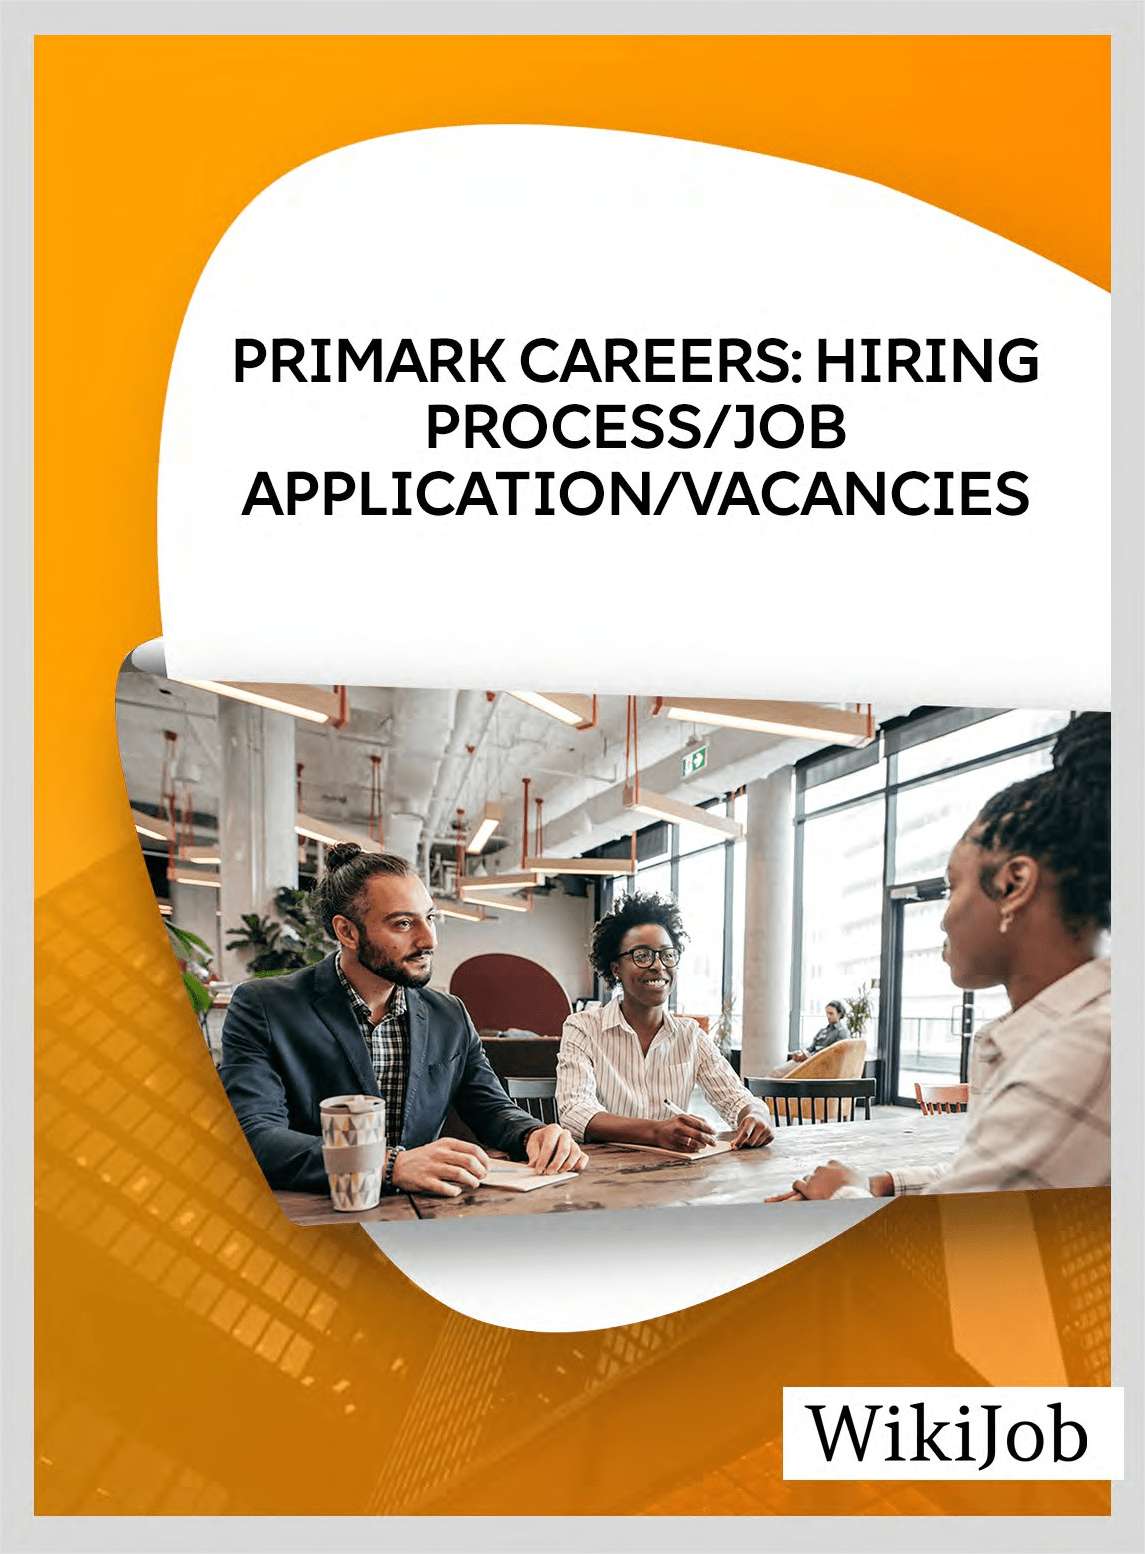 Primark Careers: Hiring Process/Job Application/Vacancies